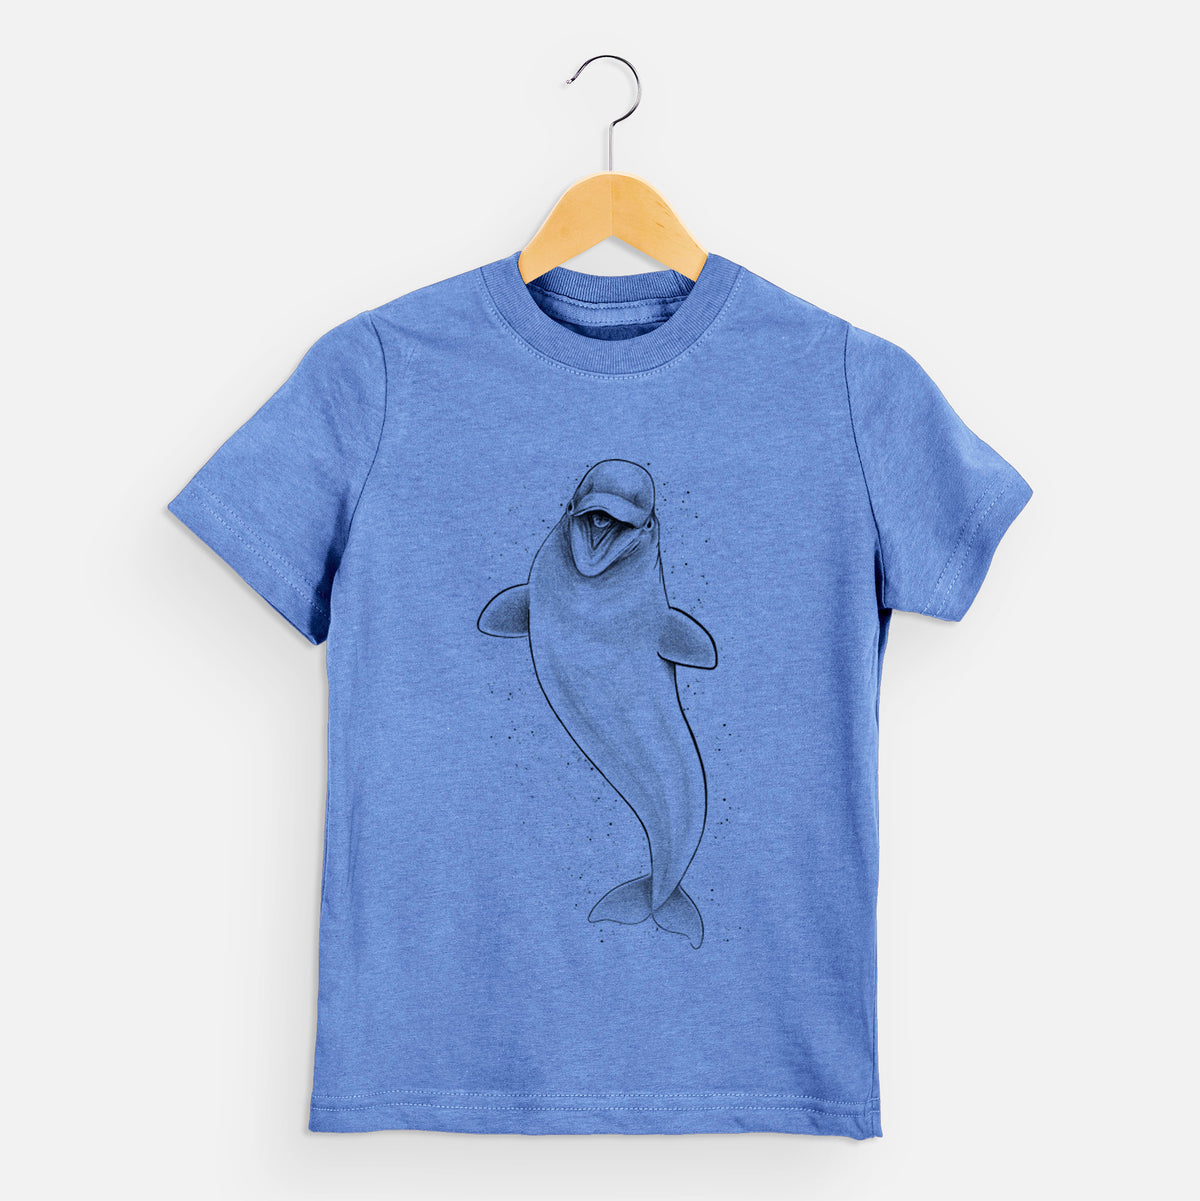 Happy Beluga Whale - Delphinapterus leucas - Kids Shirt